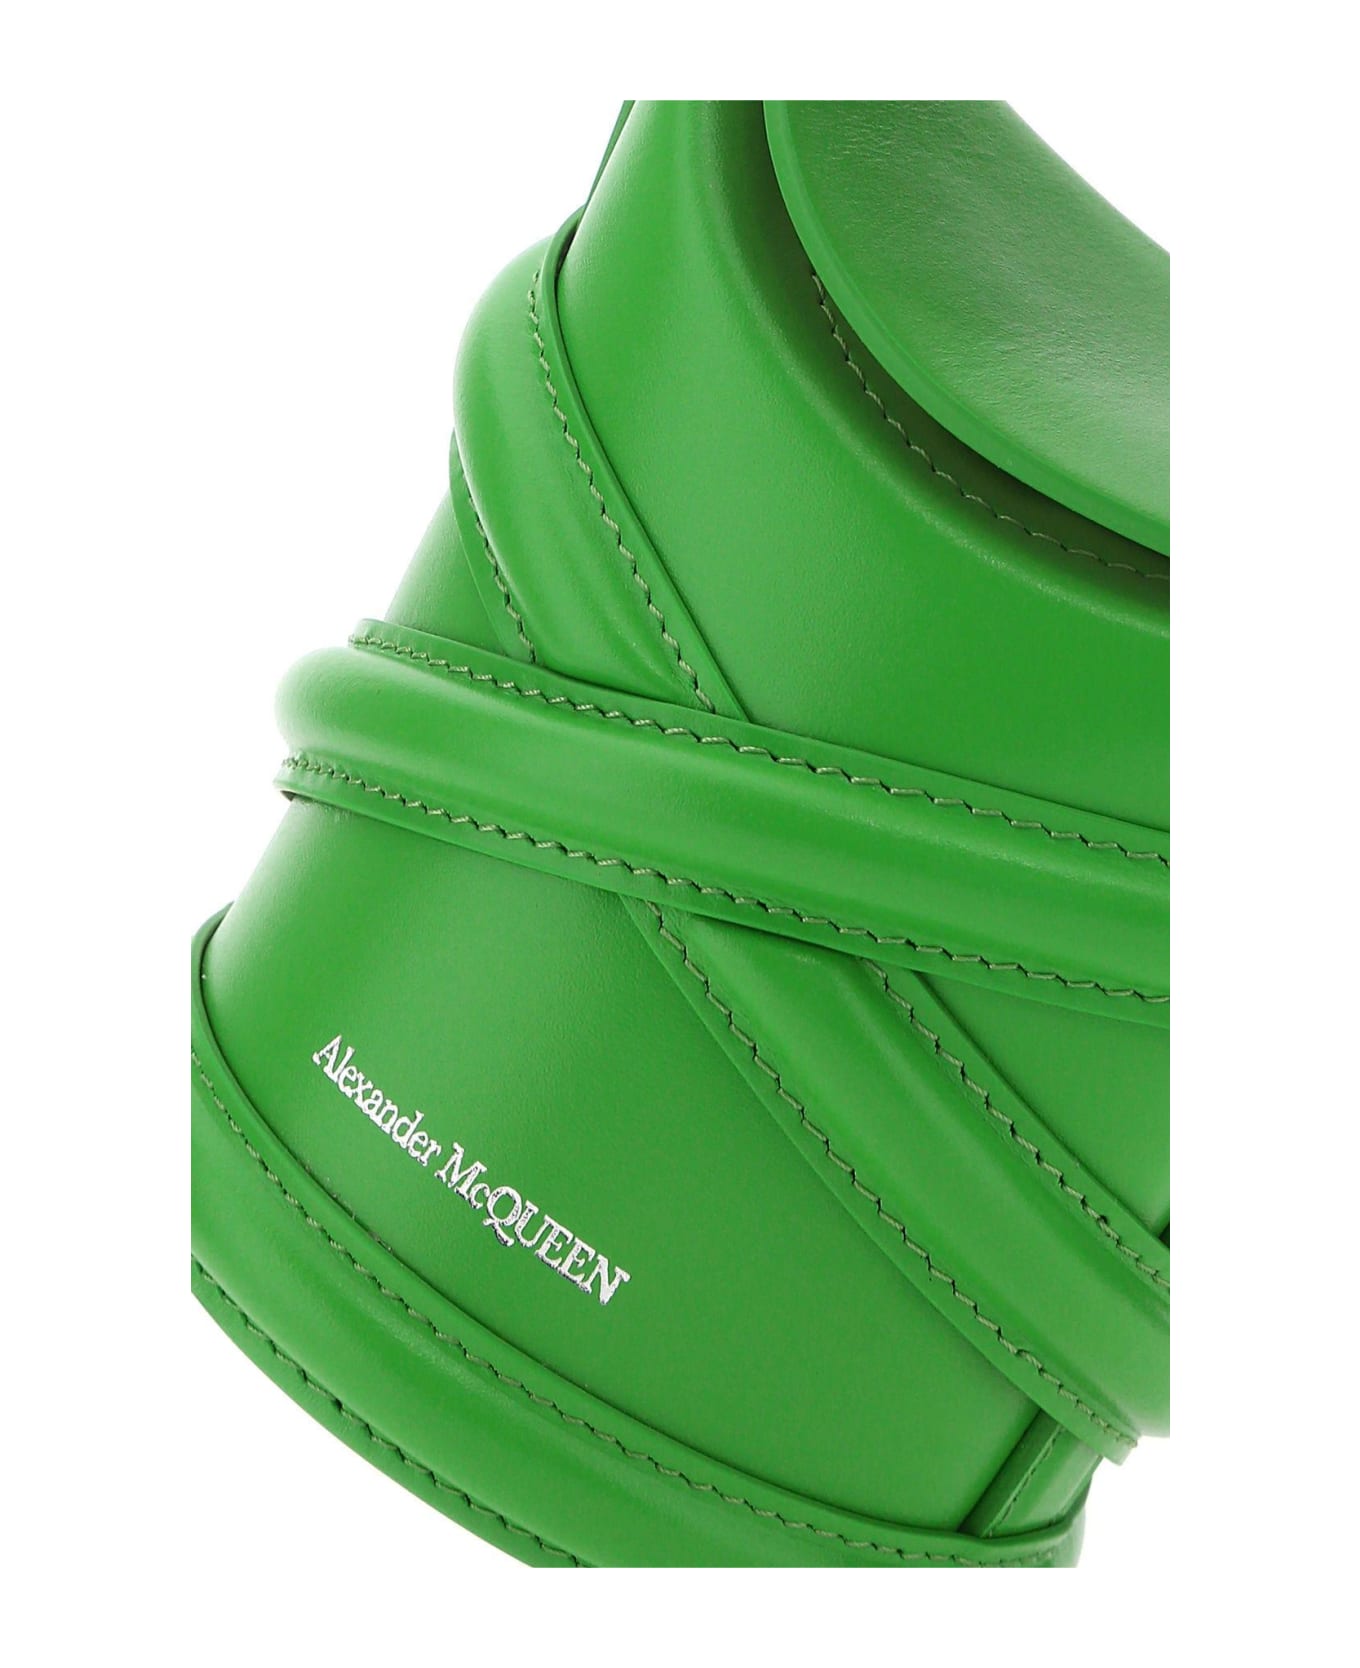 Alexander McQueen Grass Green Leather Mini The Curve Bucket Bag - Green